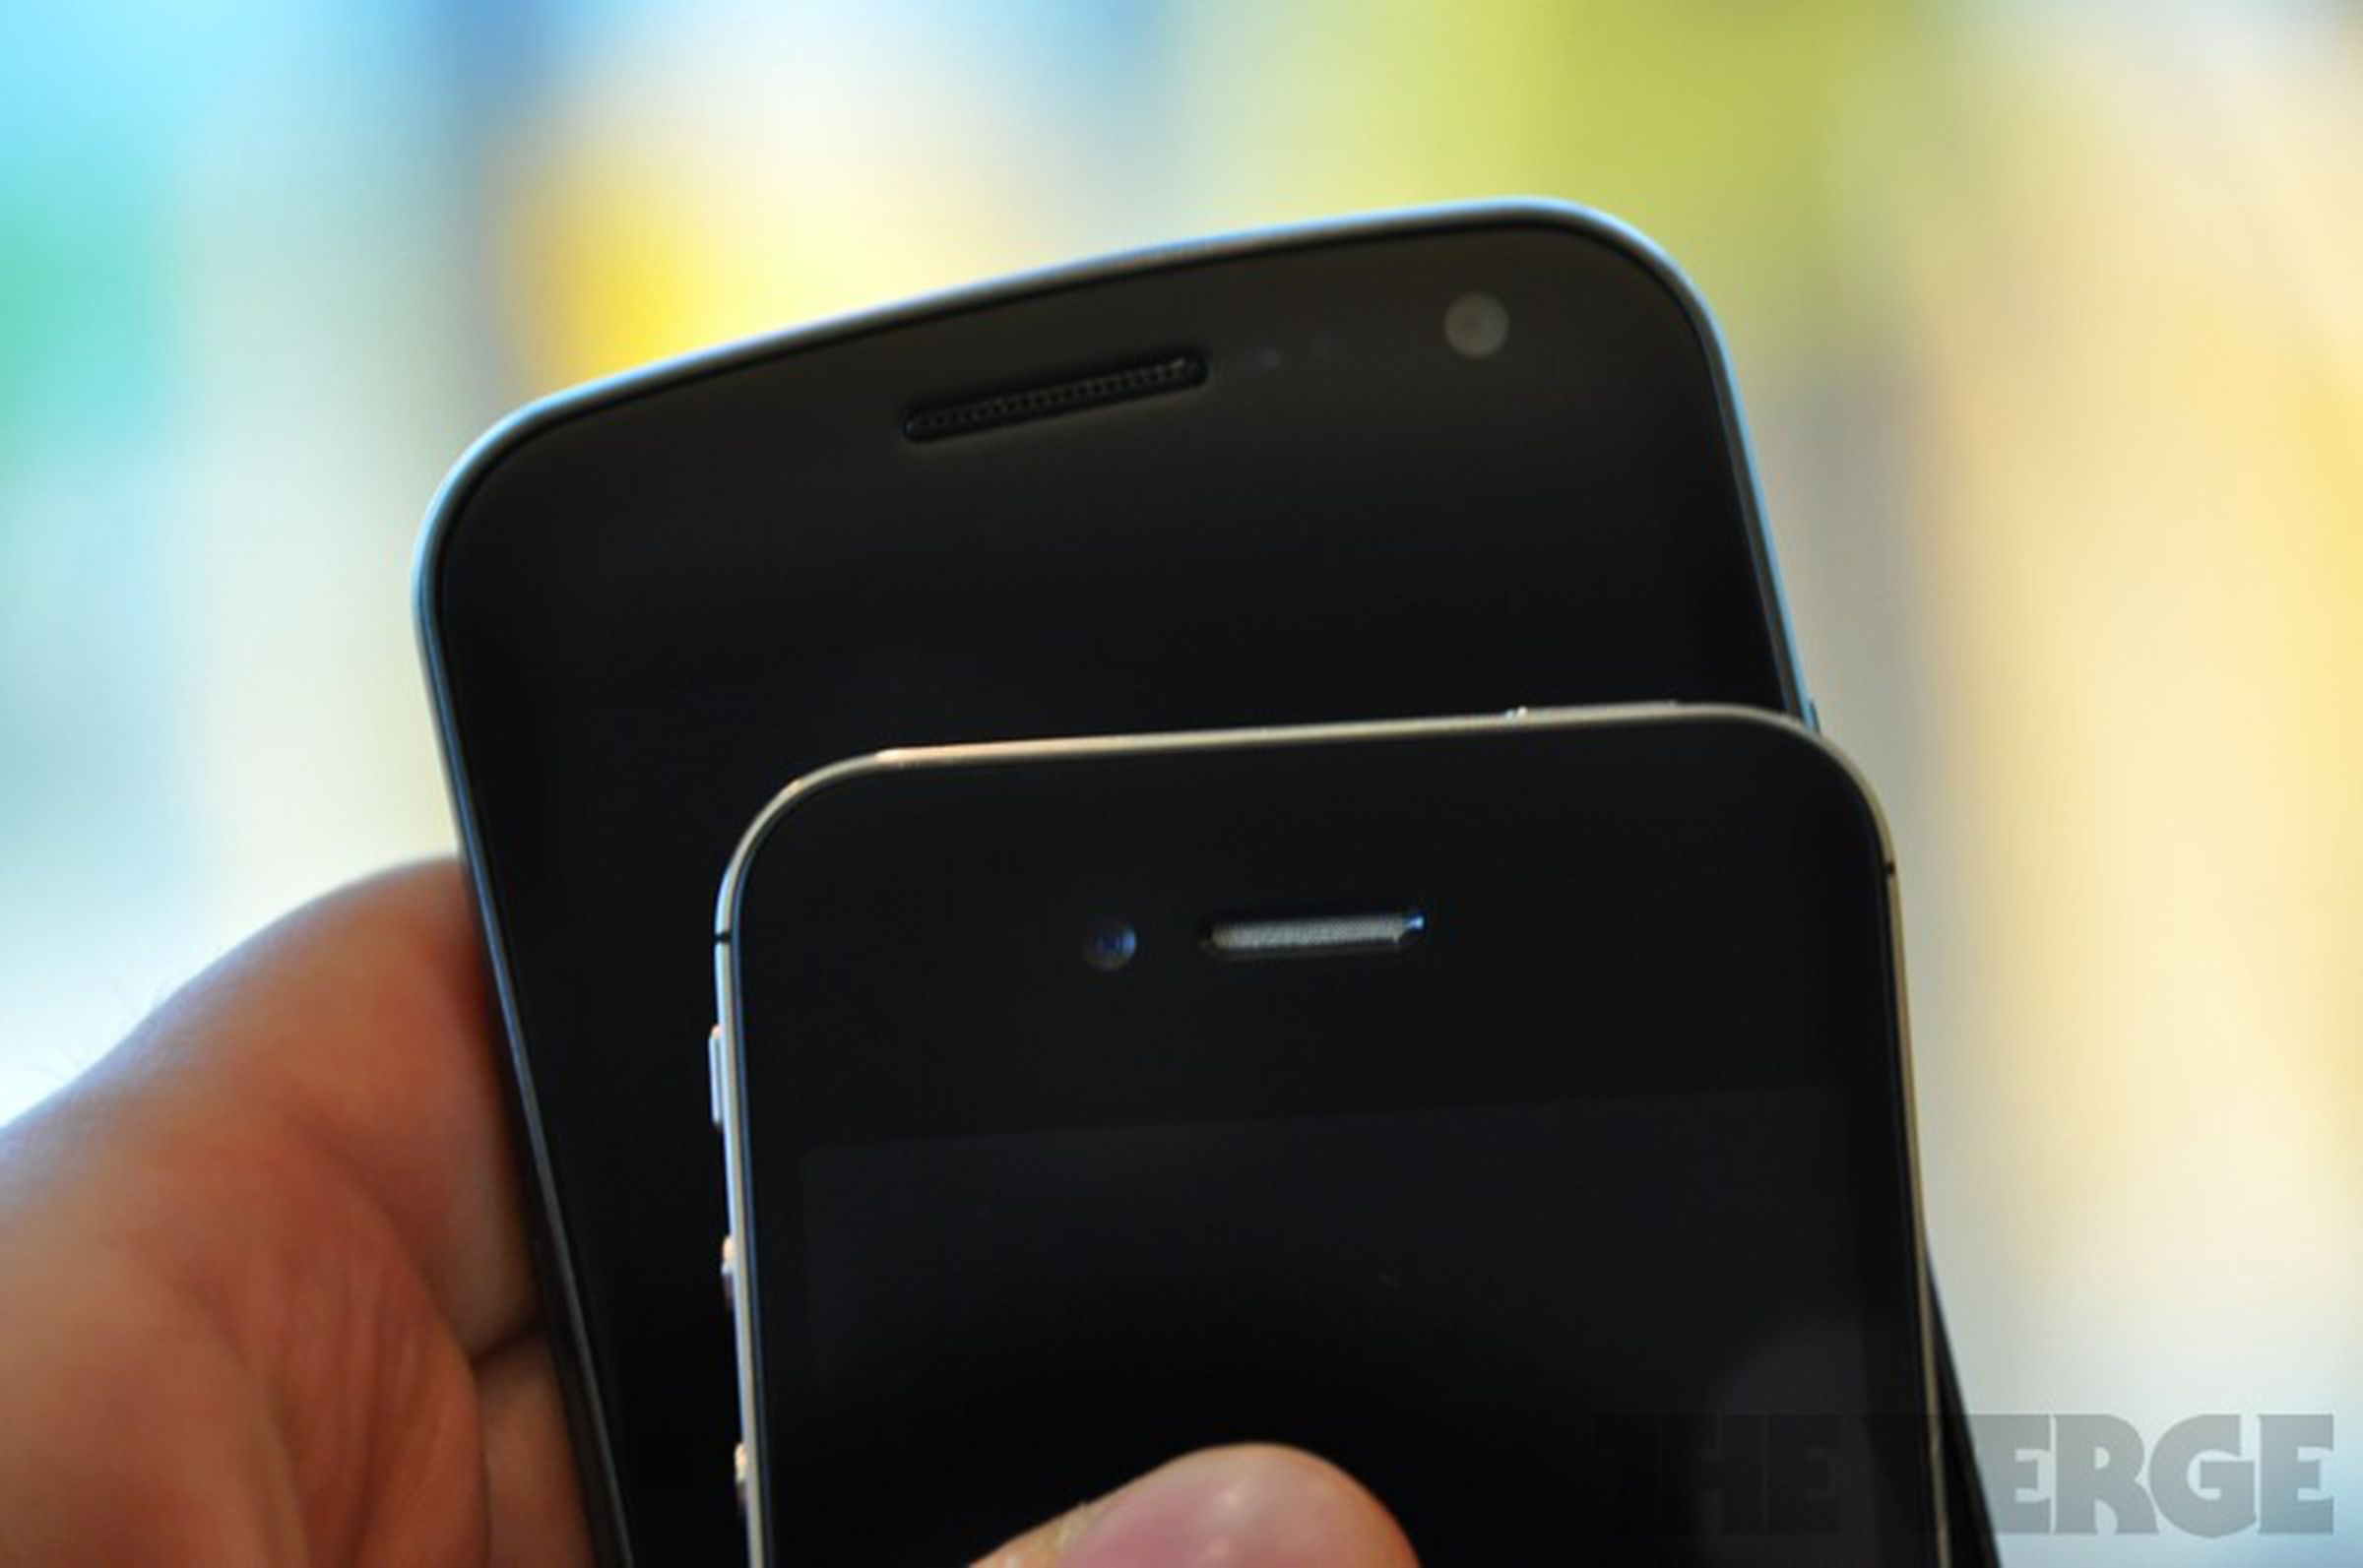 Samsung Galaxy Nexus vs iPhone 4S comparison photos